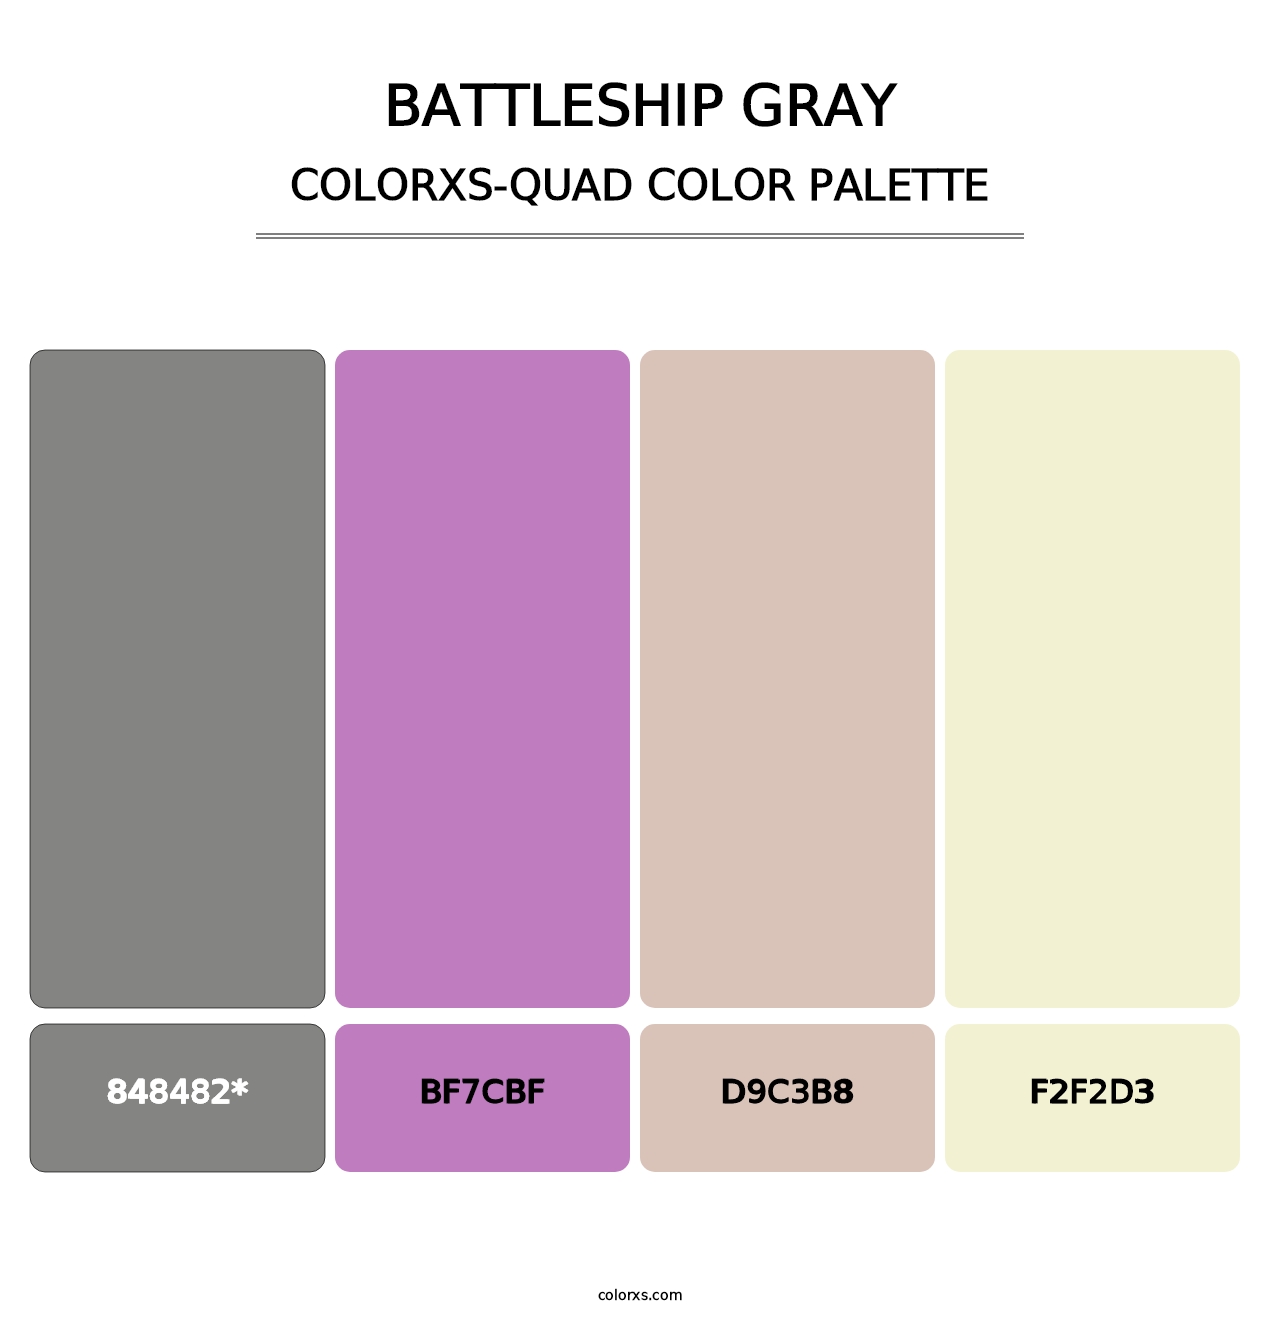 Battleship Gray - Colorxs Quad Palette